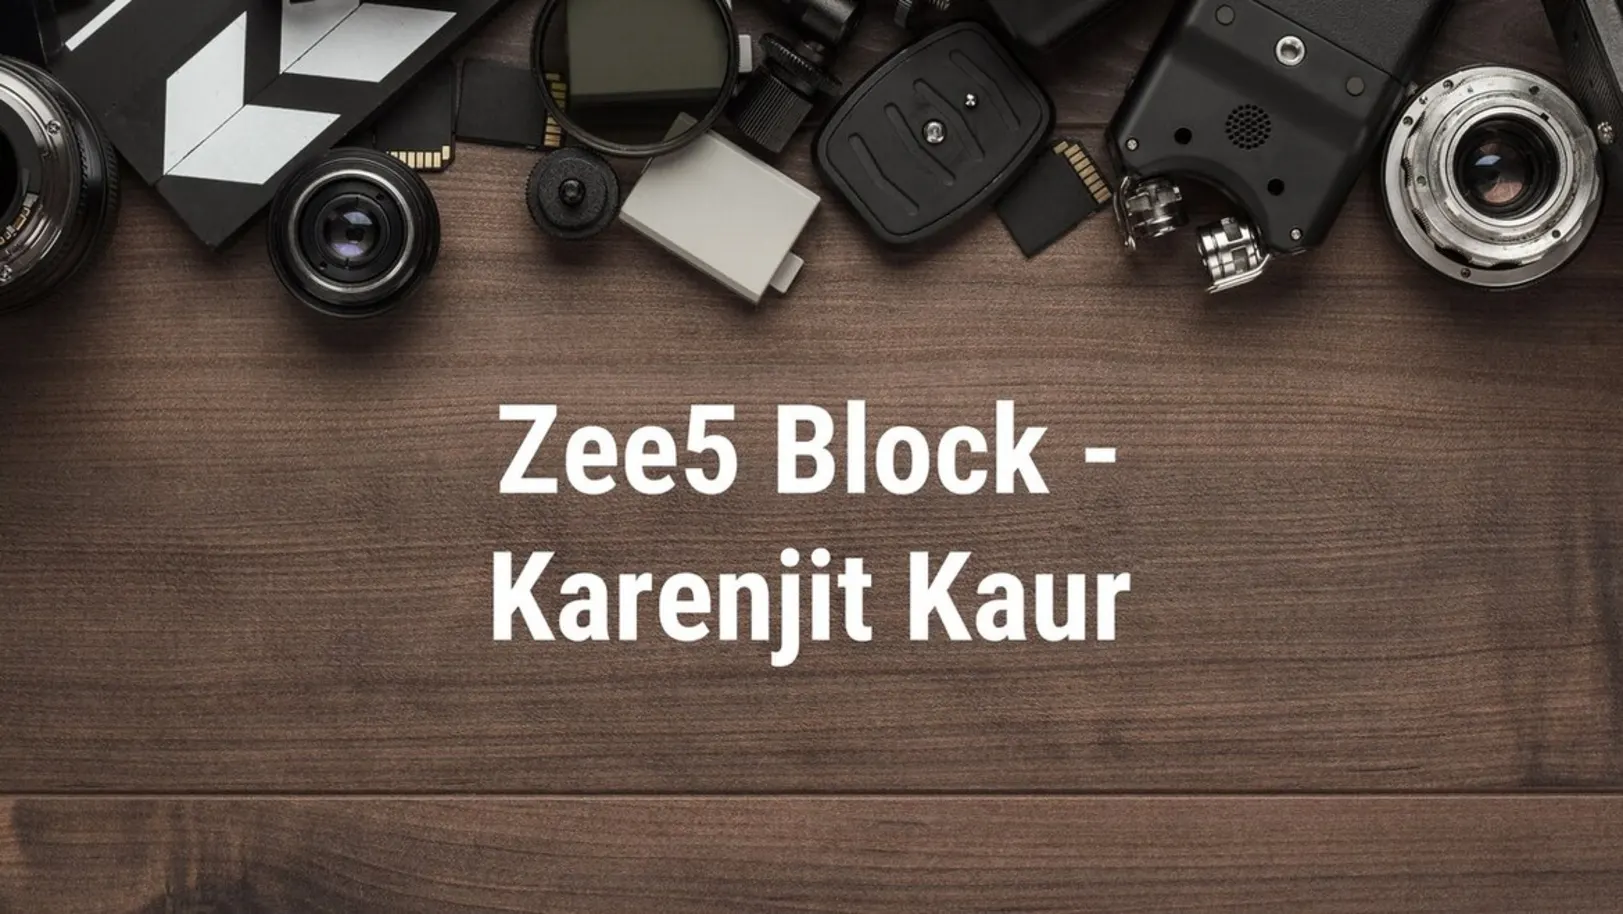 Zee5 Block - Karenjit Kaur Streaming Now On Zee Café HD